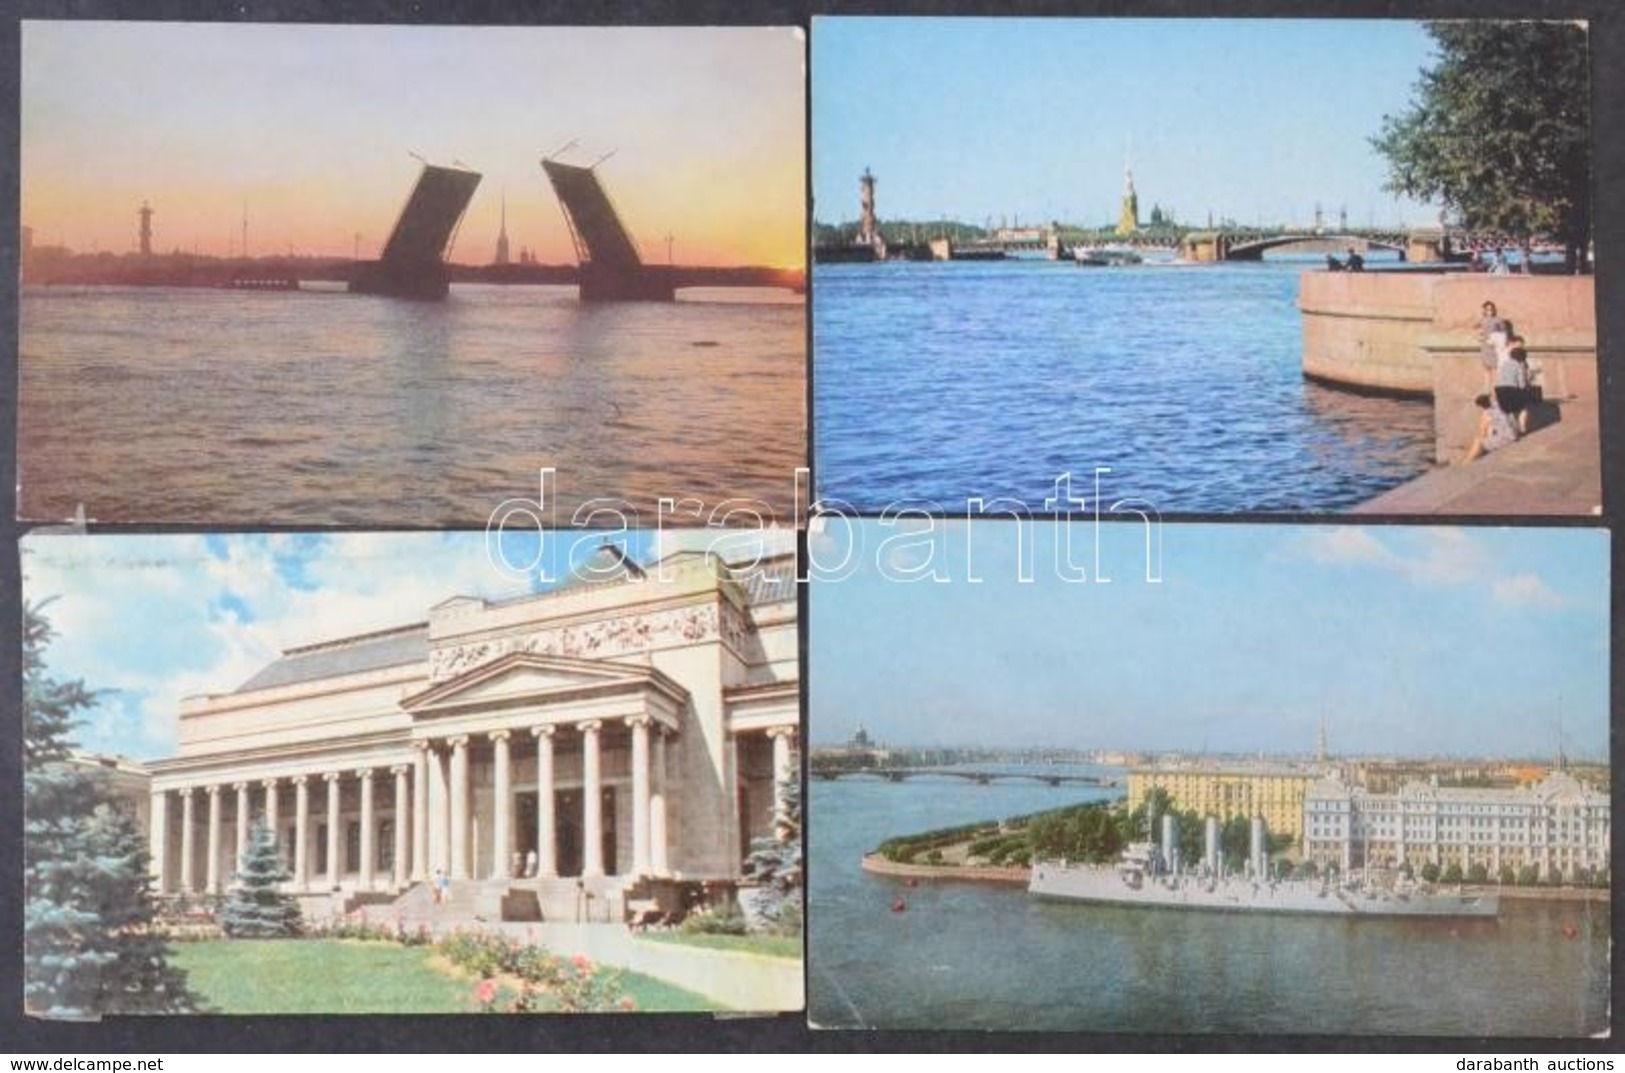 ** * Kb. 700 Db MODERN Magyar Városképes Lap és Motívumok / Cca. 700 Modern Hungarian Town-view Postcards And Motives - Ohne Zuordnung